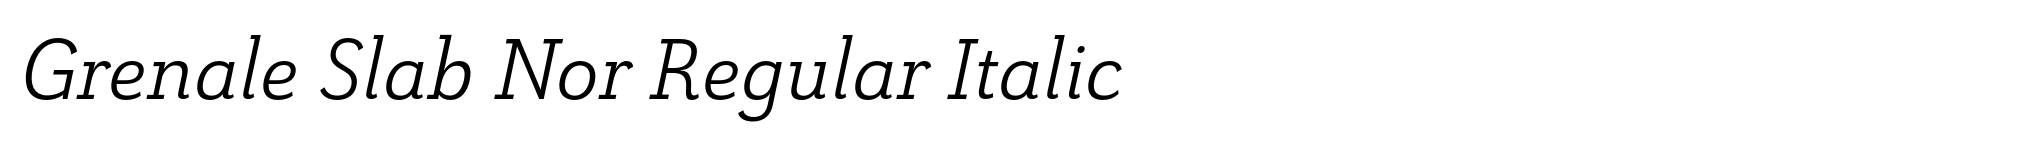 Grenale Slab Nor Regular Italic image